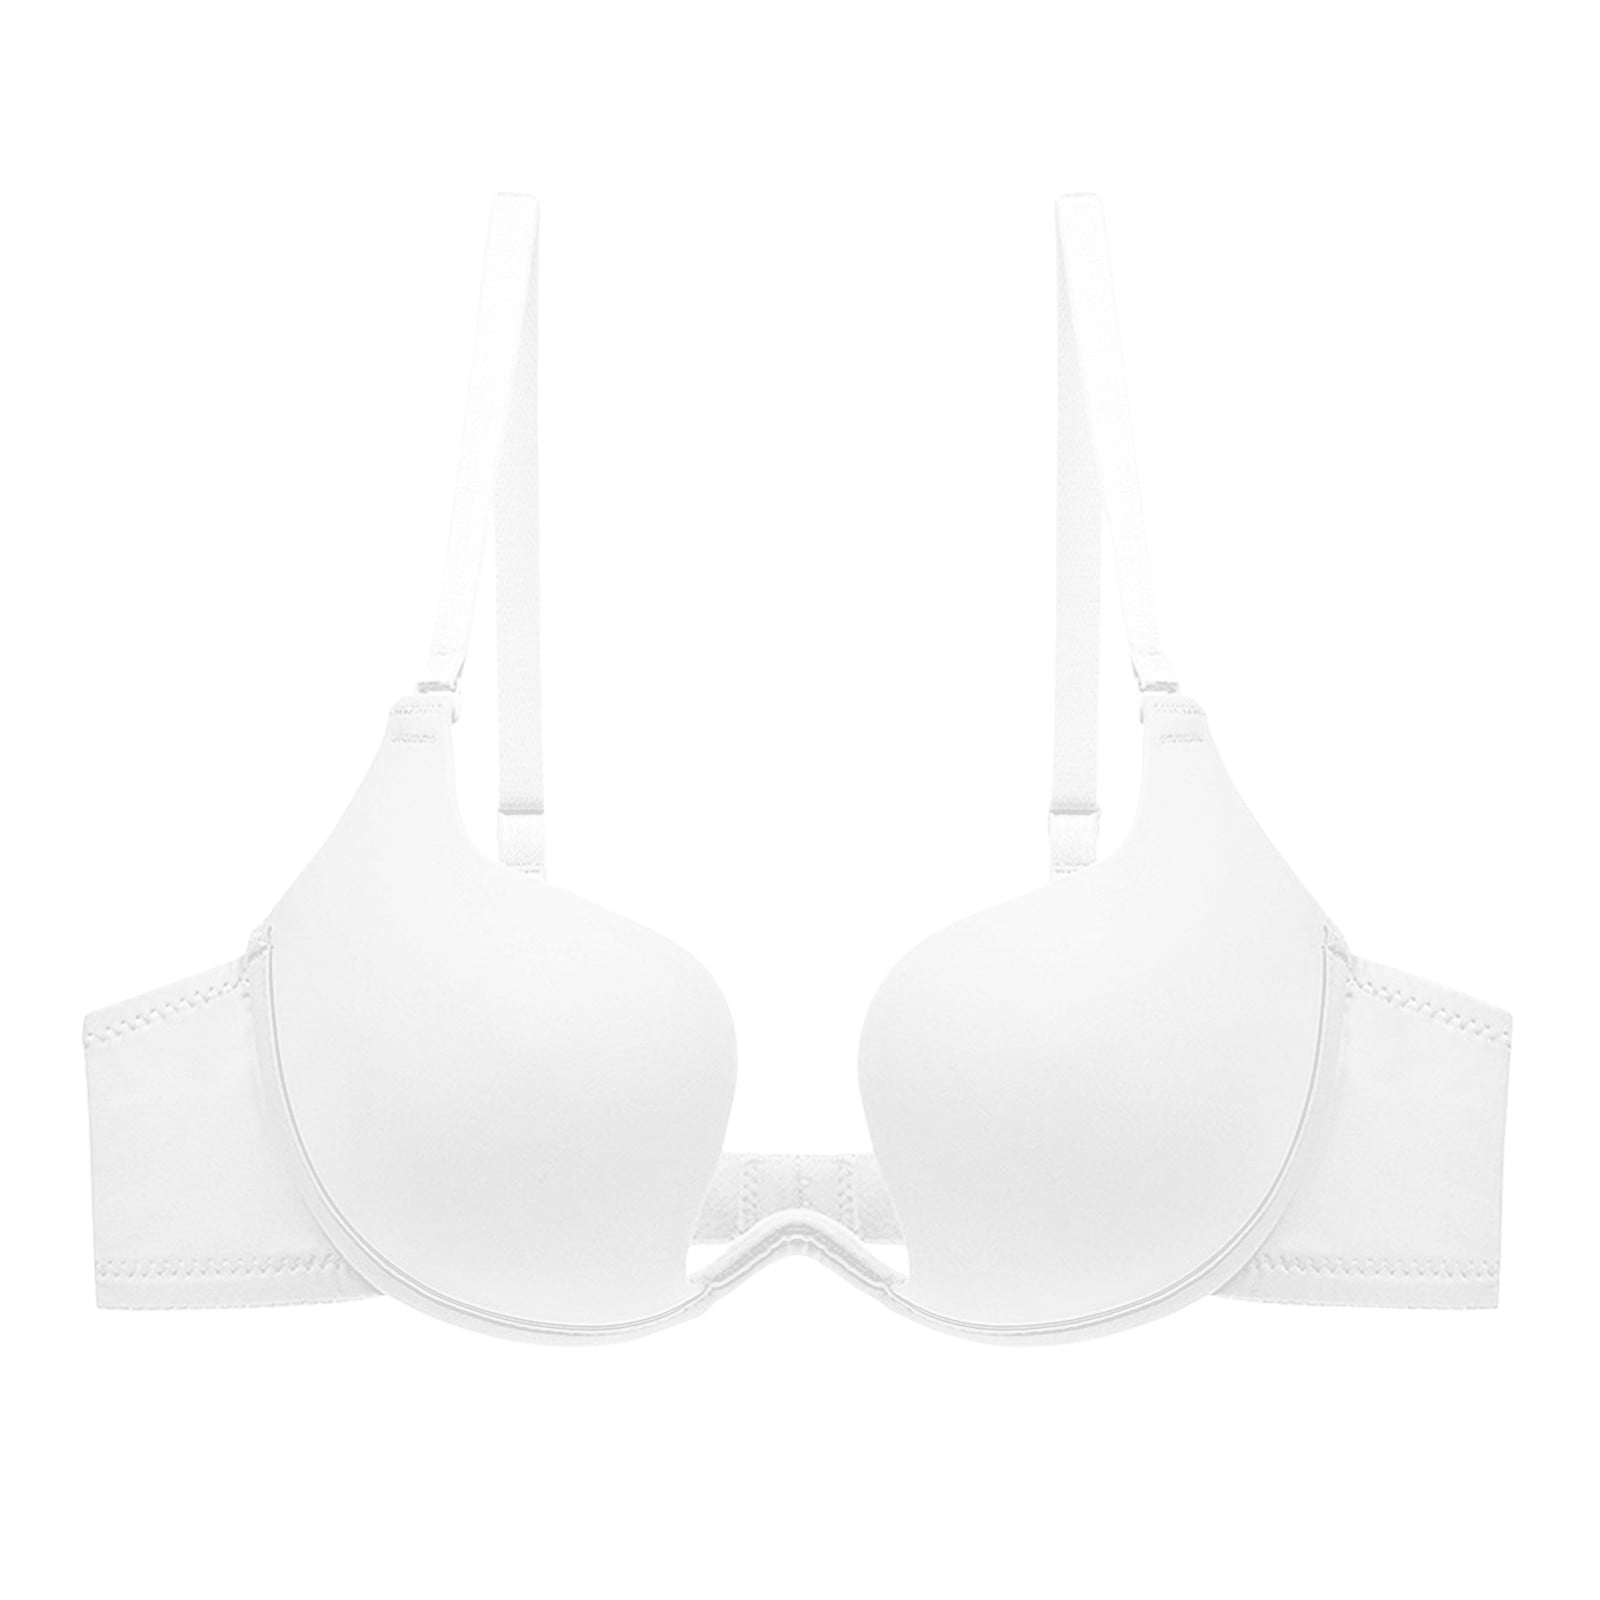 Bazyrey Lingerie for Women V Bra Halter Low Back Padded Convertible Sexy  Push Up Bra White Buy 2 Get 3